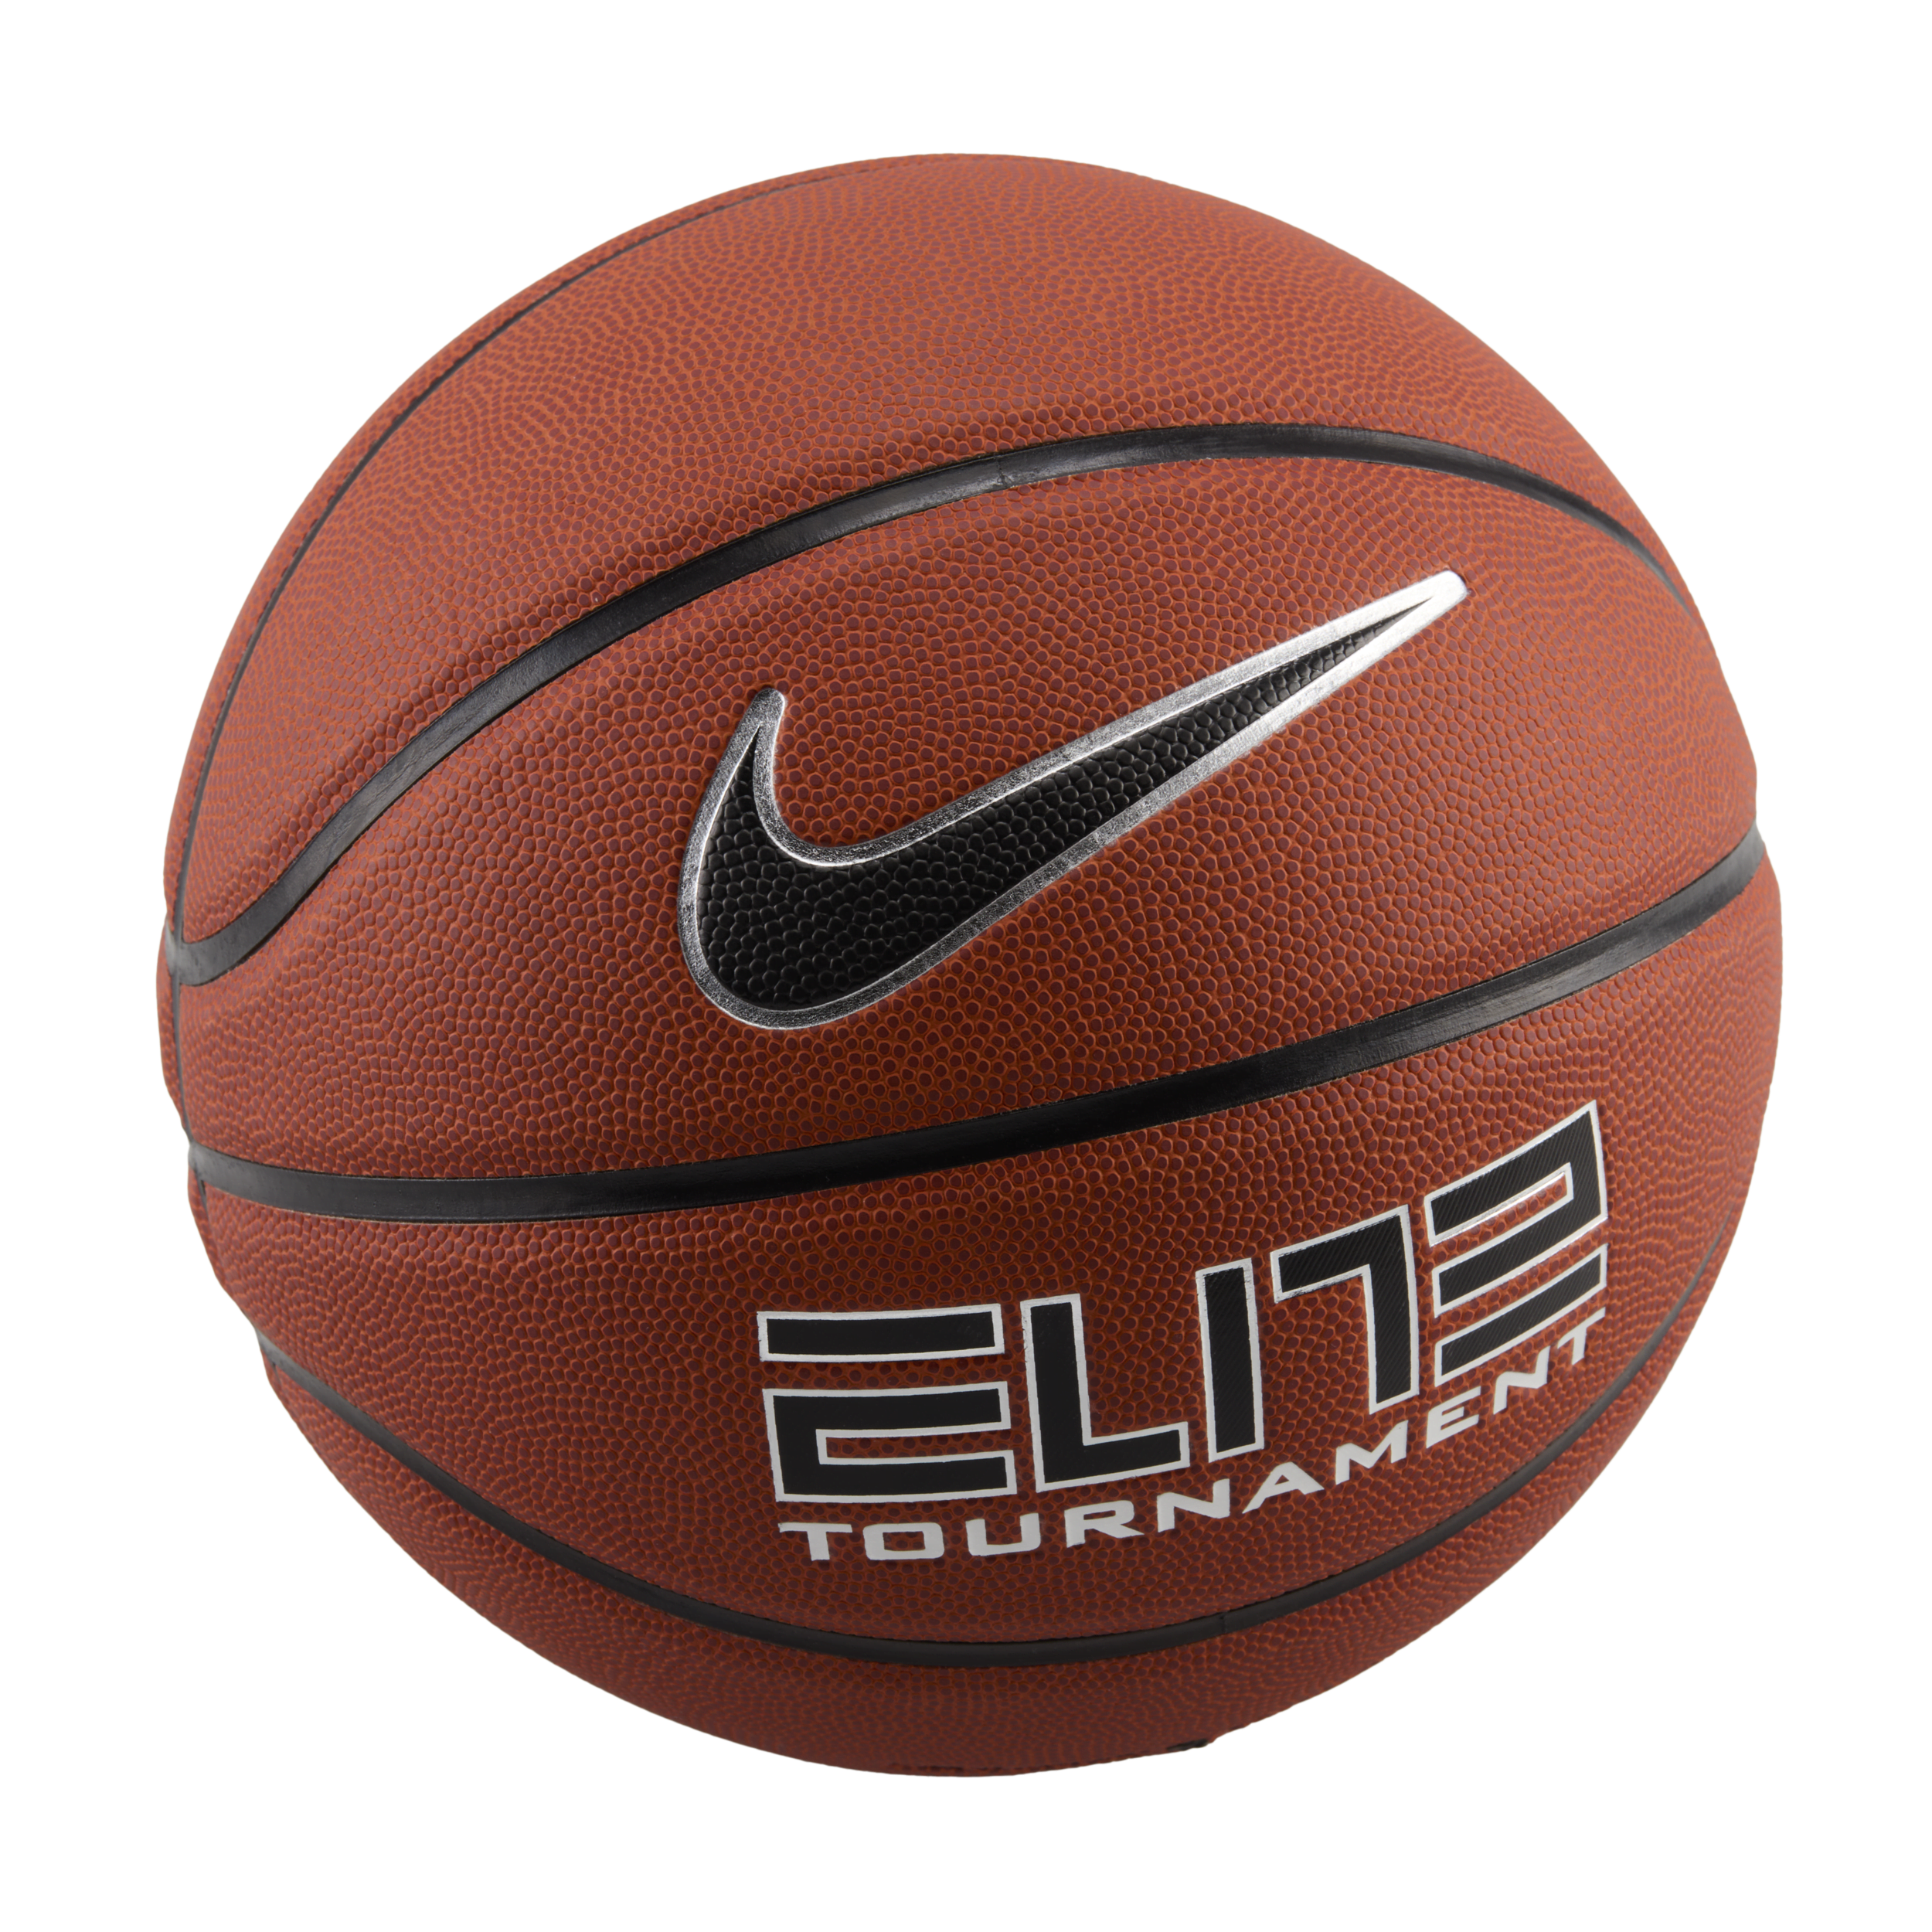 Nike Elite Tourna t 8-Panel basketbal (zonder lucht) Oranje